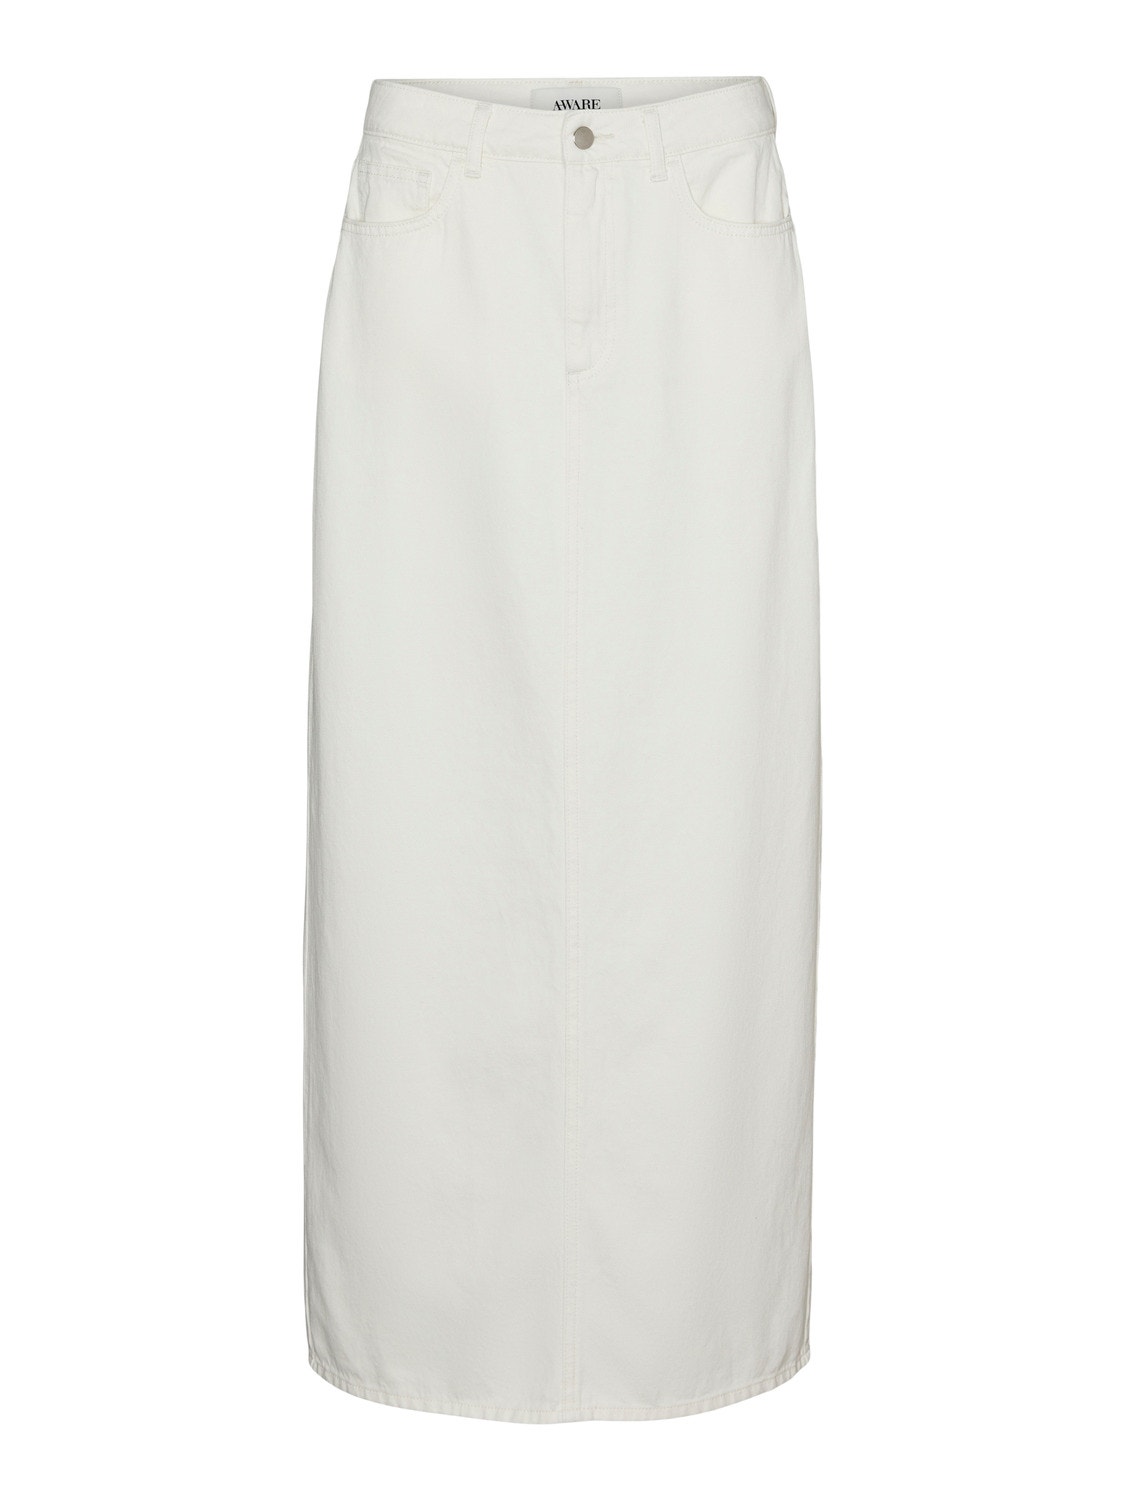 Vero Moda VMGRACIA Long Skirt -Ecru - 10306289